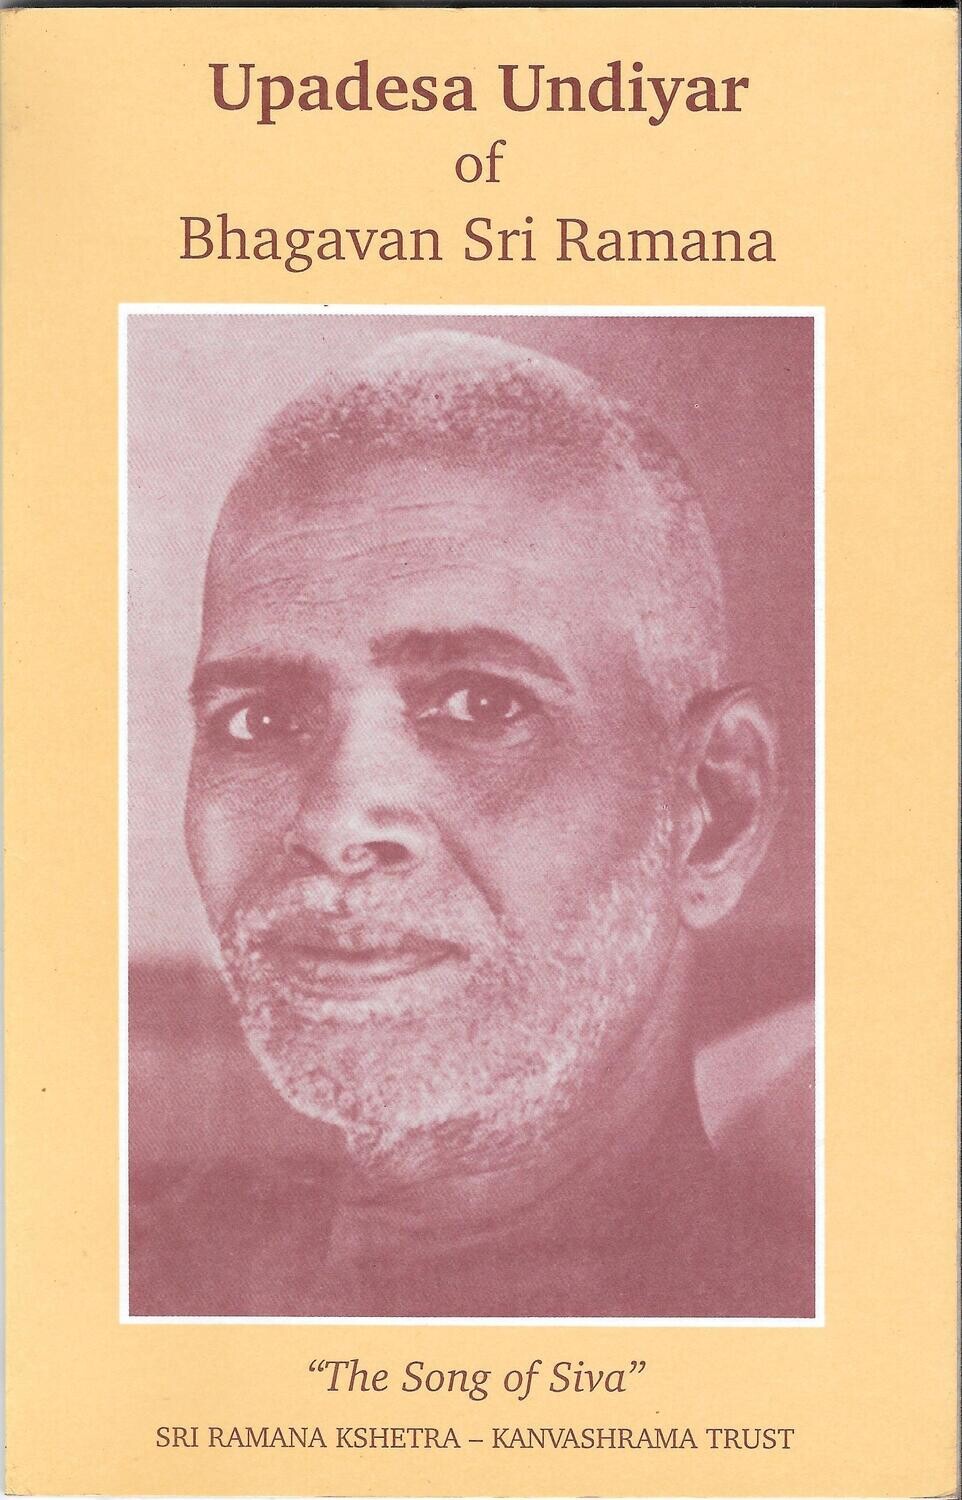 Upadesa Undiyar of Bhagavan Sri Ramana